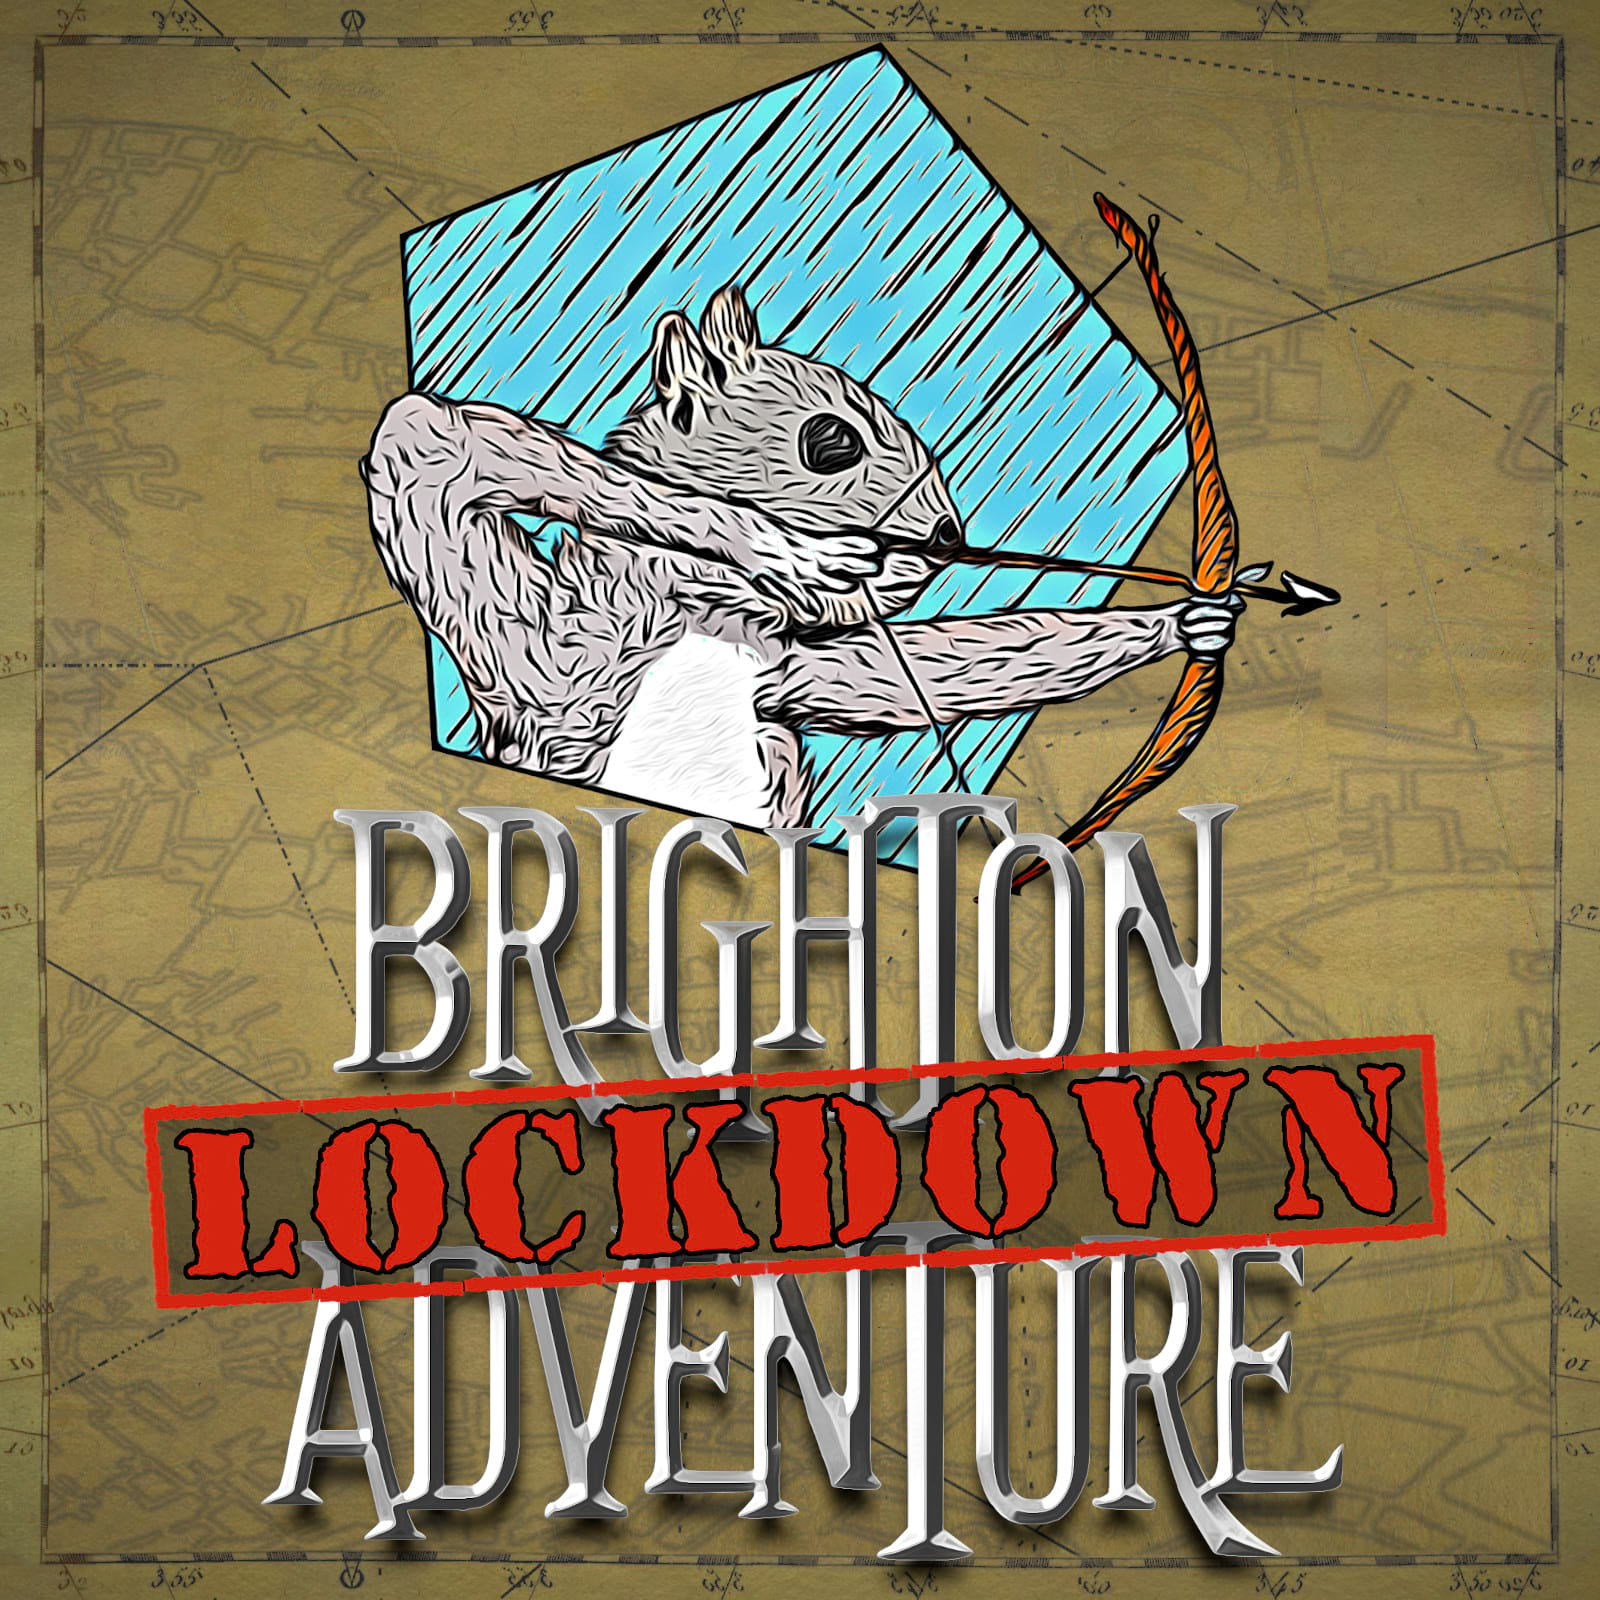 Brighton Lockdown Adventure